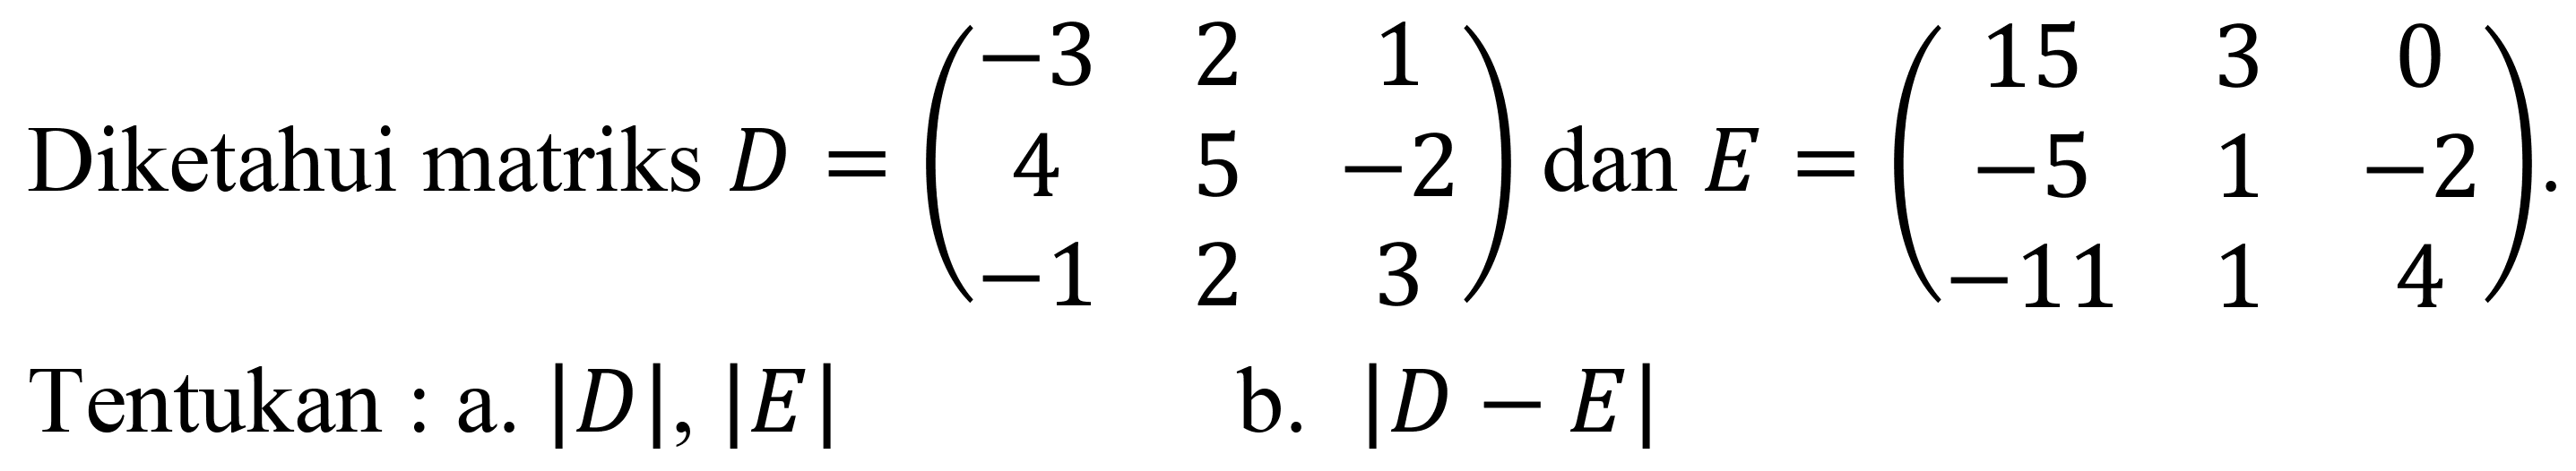 Diketahui matriks  D=(-3  2  1  4  5  -2  -1  2  3) dan E=(15  3  0  -5  1  -2  -11  1  4) .
Tentukan : a.  |D|,|E| 
b.  |D-E| 